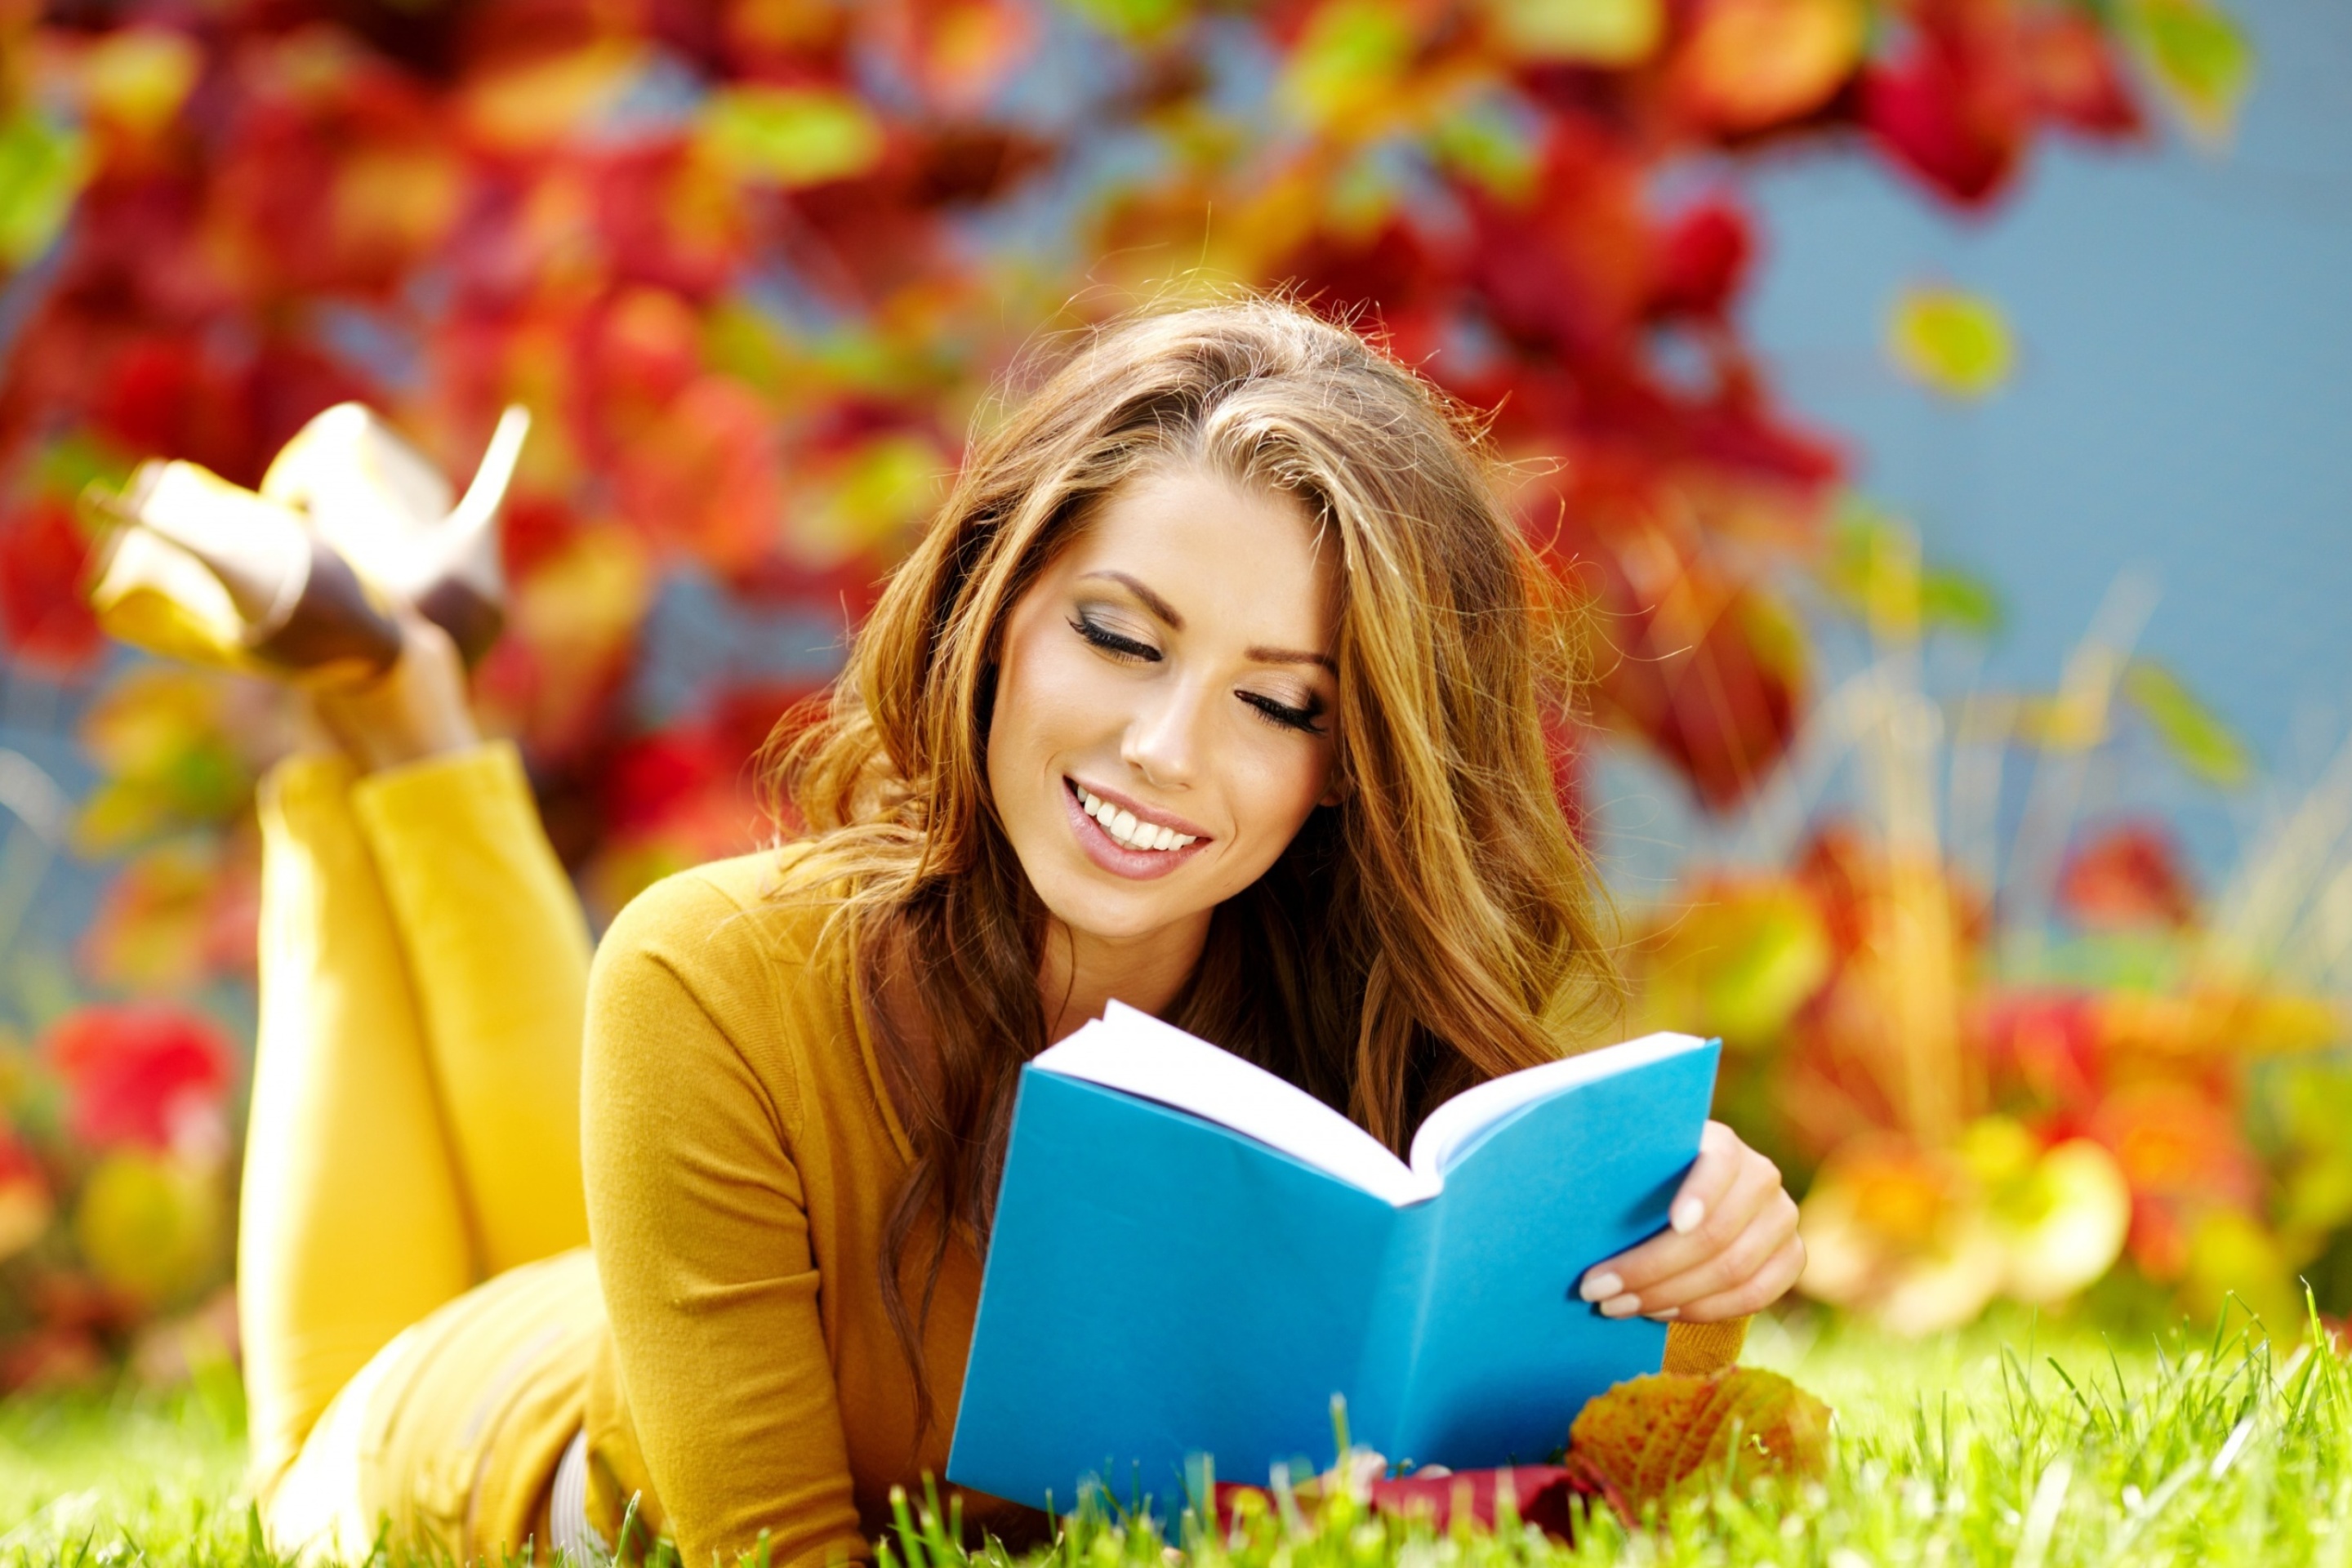 Обои Girl Reading Book in Autumn Park 2880x1920